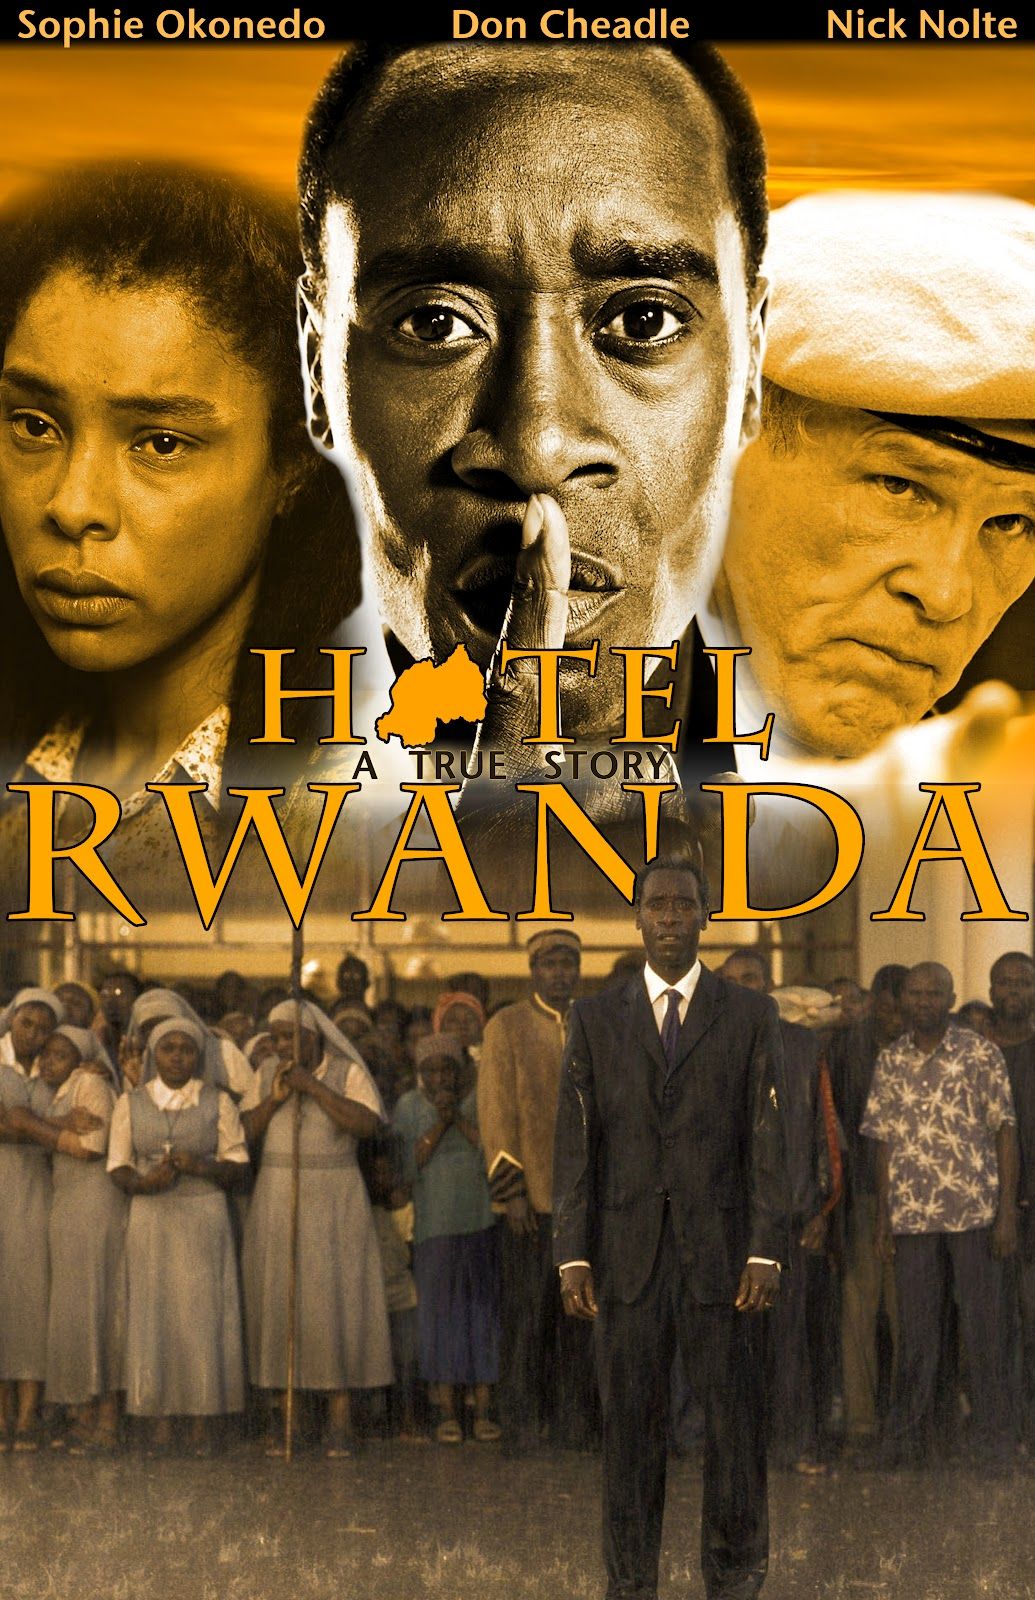 Hotel Rwanda Poster 10: Extra Large Poster Image